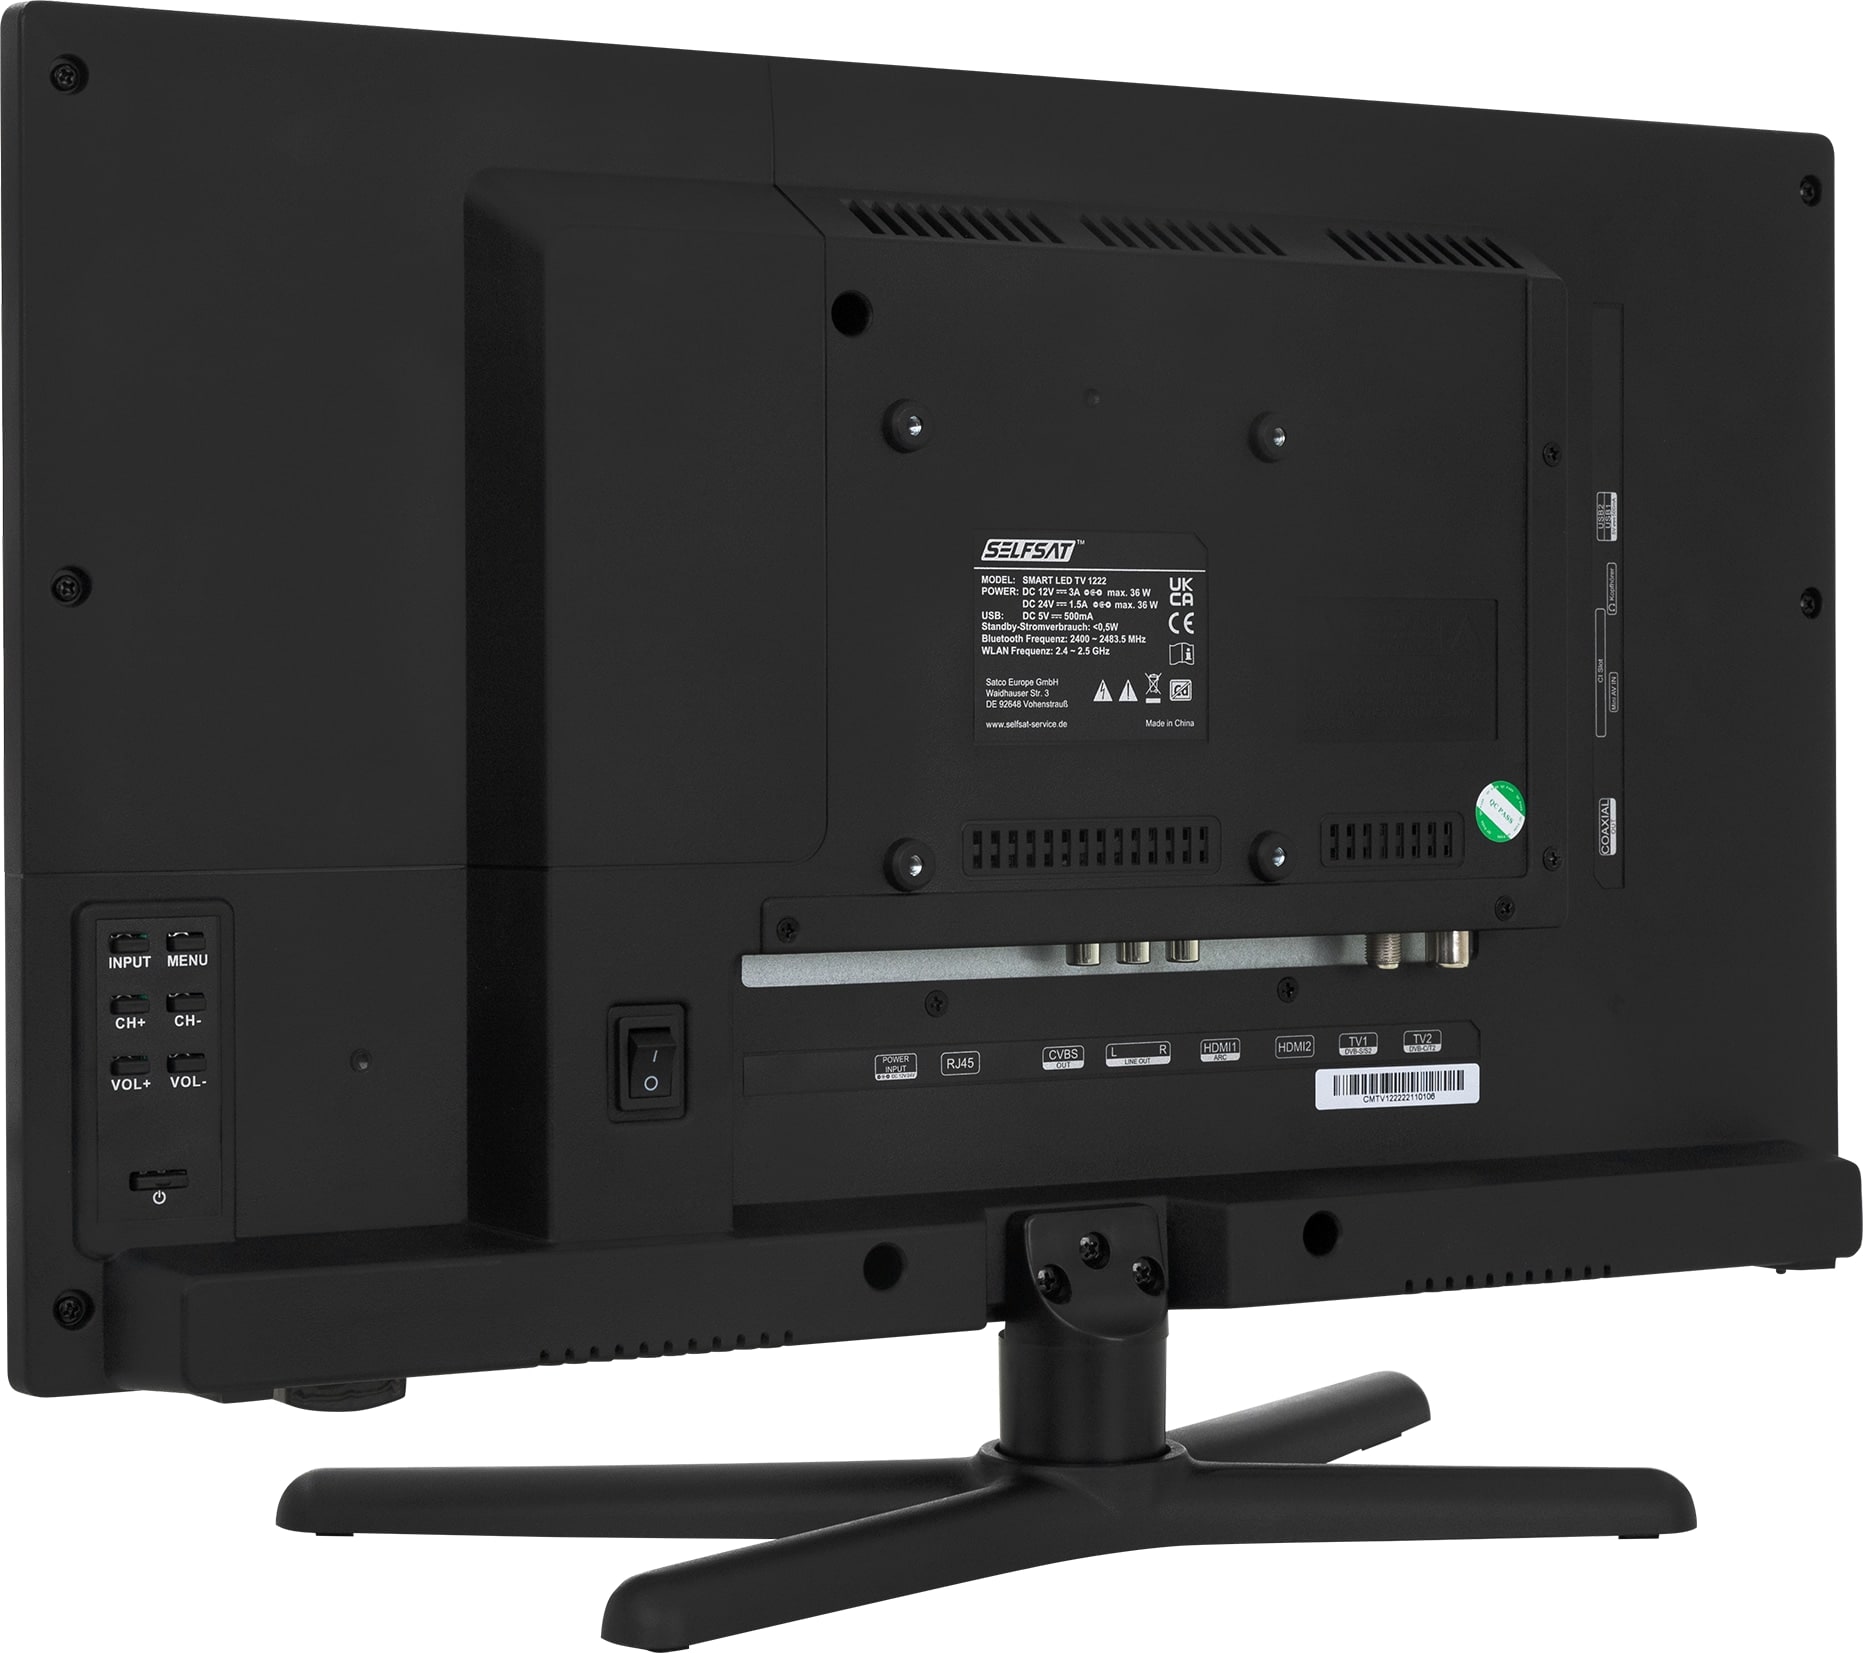 SELFSAT LED-TV Smart 1222, 55 cm (22"), EEK: F, HD-Tuner, WLAN, Bluetooth